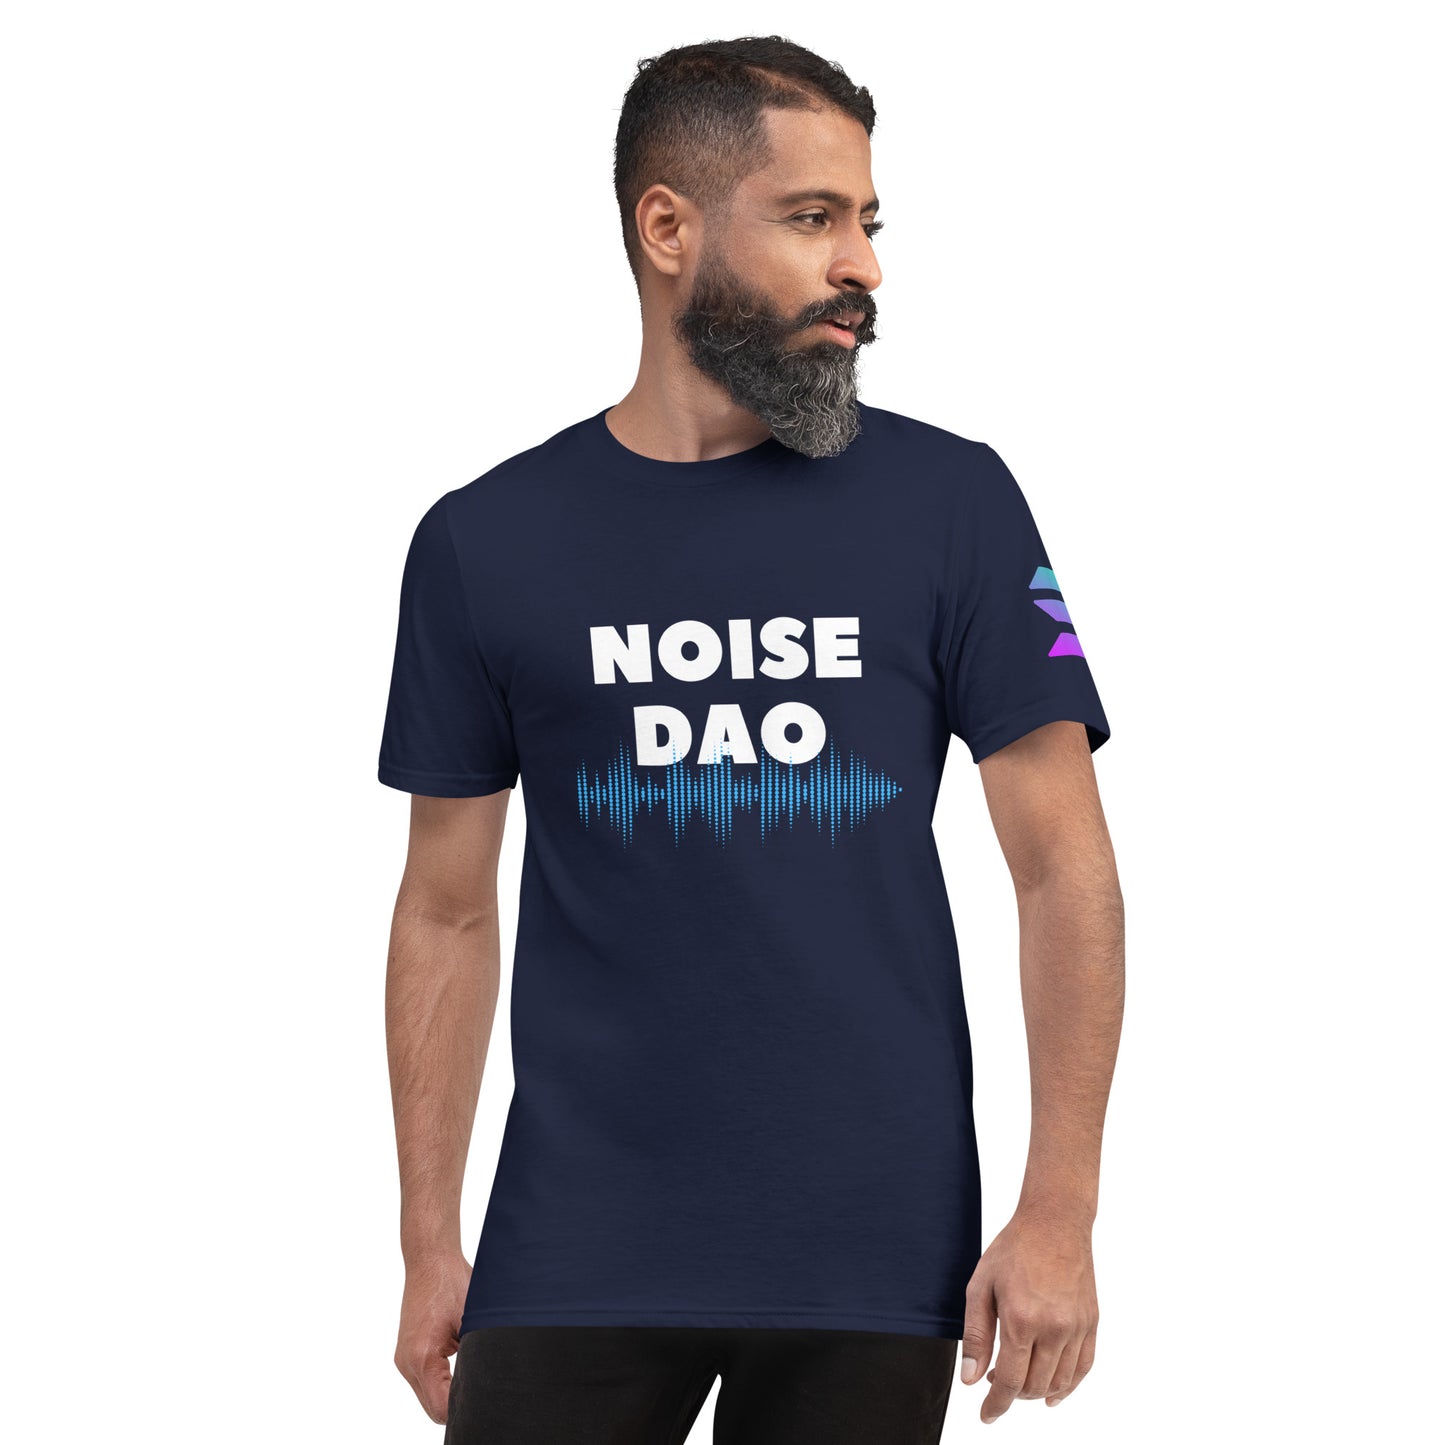 NOISE DAO T-Shirt